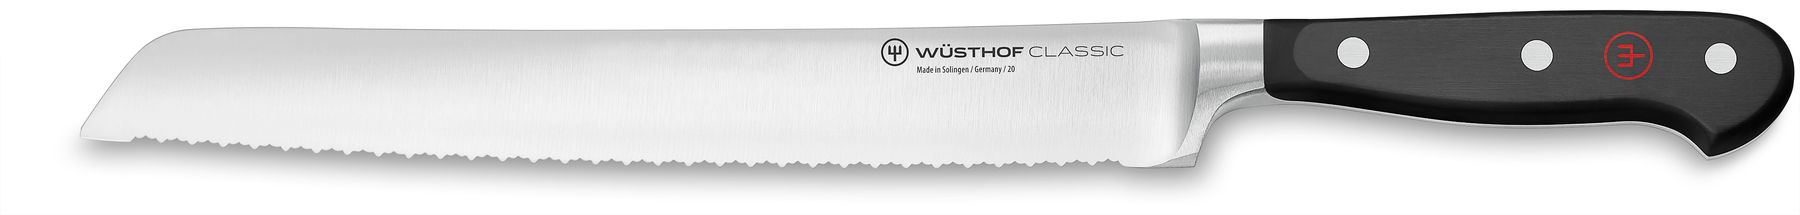 
Wusthof Bread Knife Classic Double Serrated 23 cm